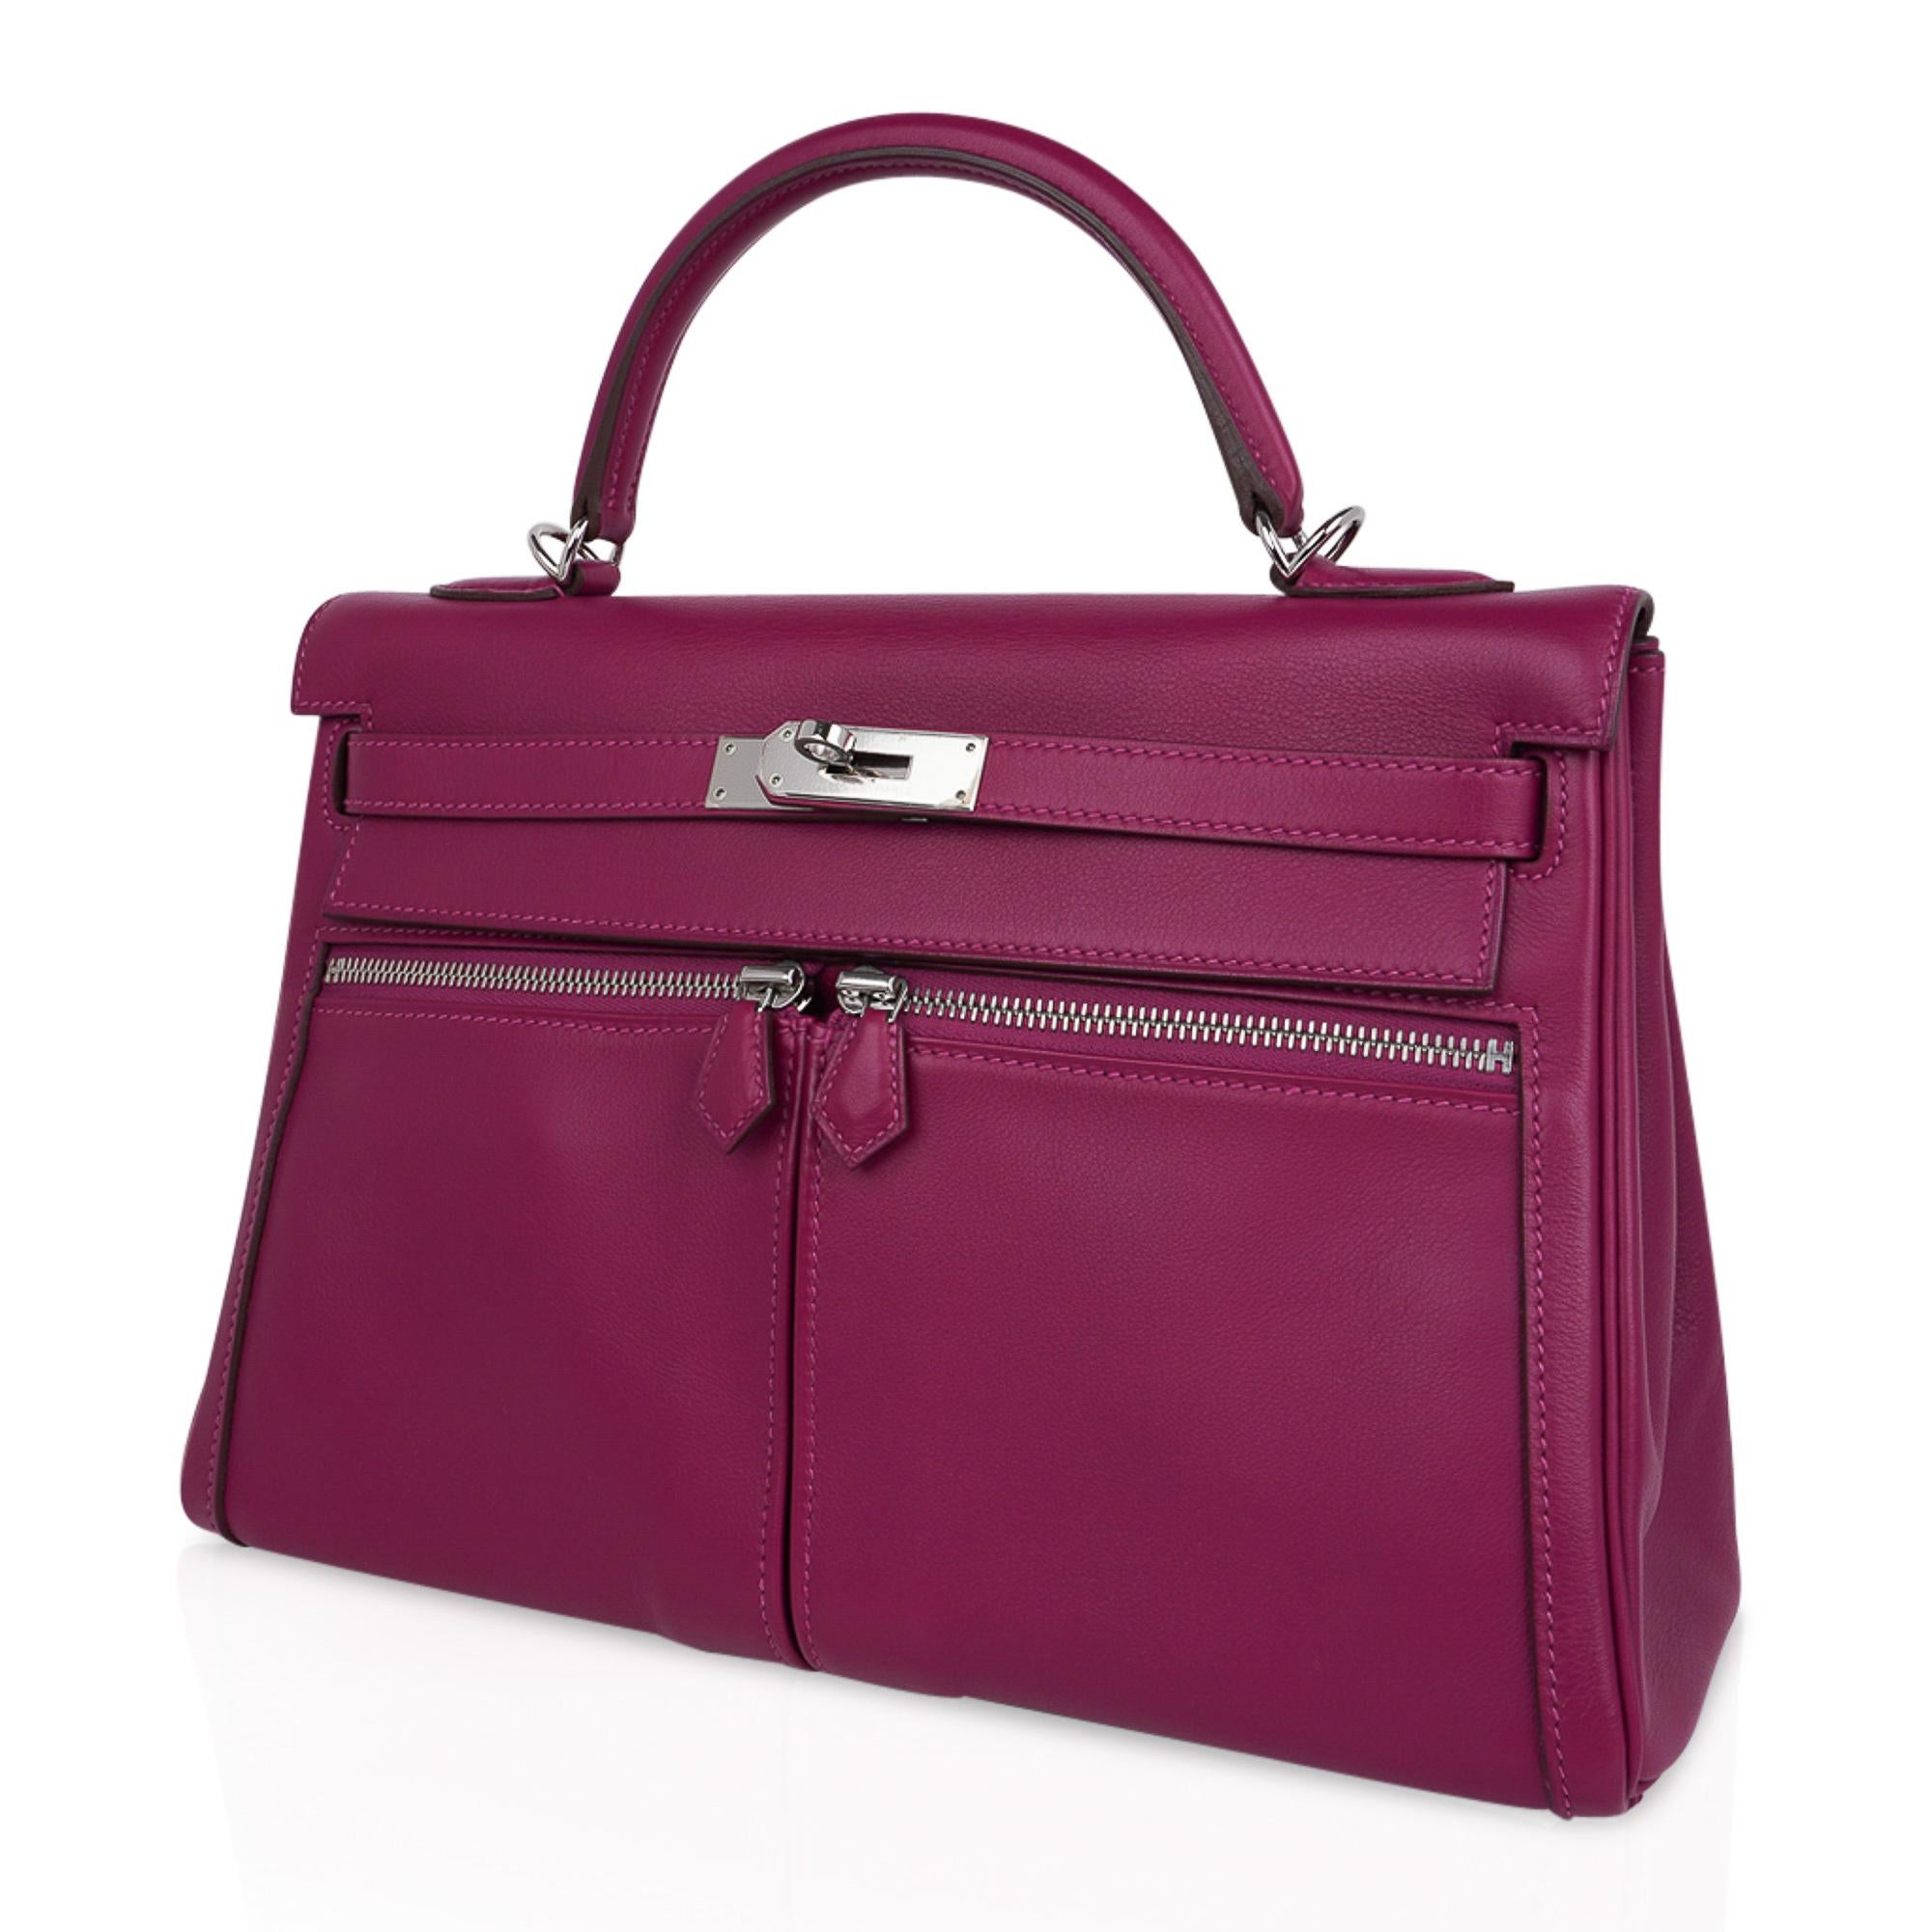 Violet Sac Hermès Kelly 32 Lakis Tosca Swift avec accessoires en palladium, neuf en vente